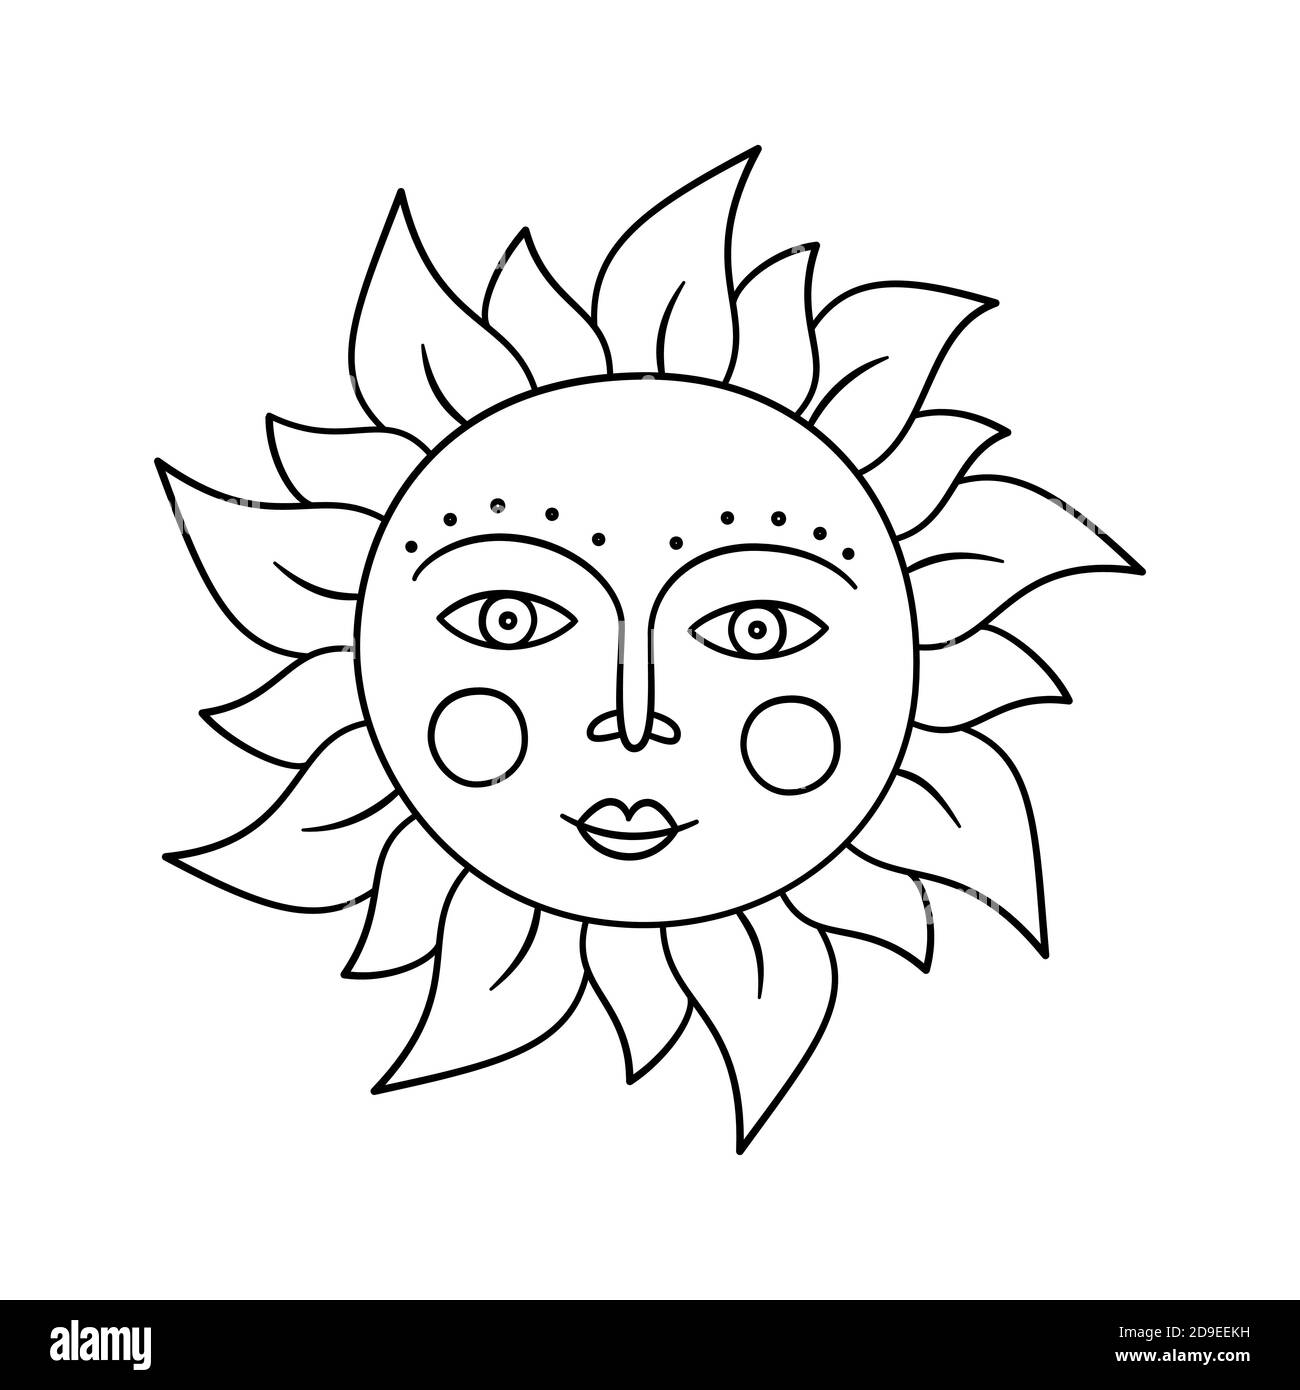 Cute sun with face in slavic folk style. Hand drawn vector illustration Stock Vector